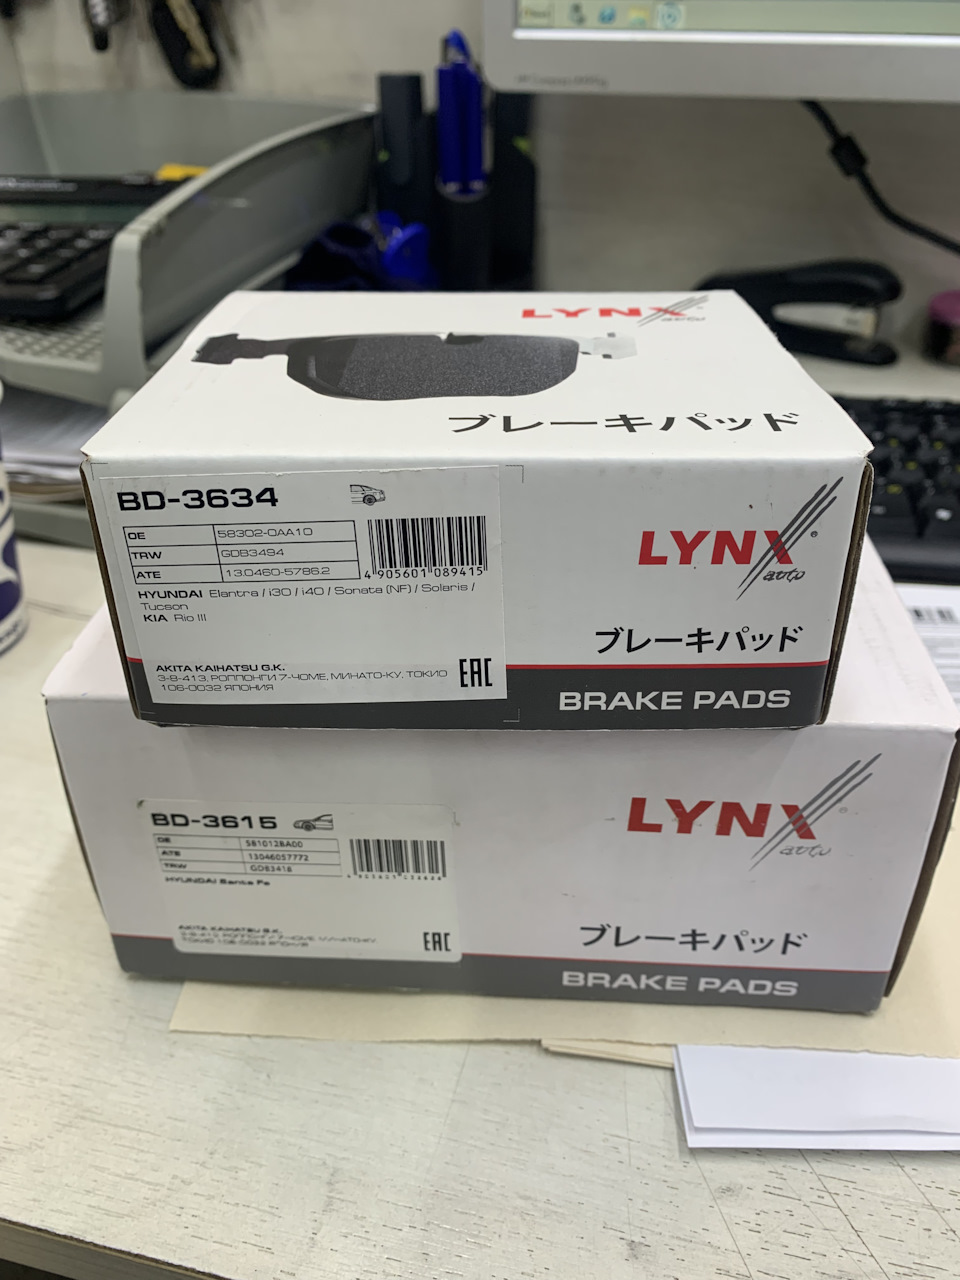 Lynx запчасти. Линкс Страна производитель. Lynx запчасти отзывы. Диски задние Lynx 408. Производитель lynx отзывы